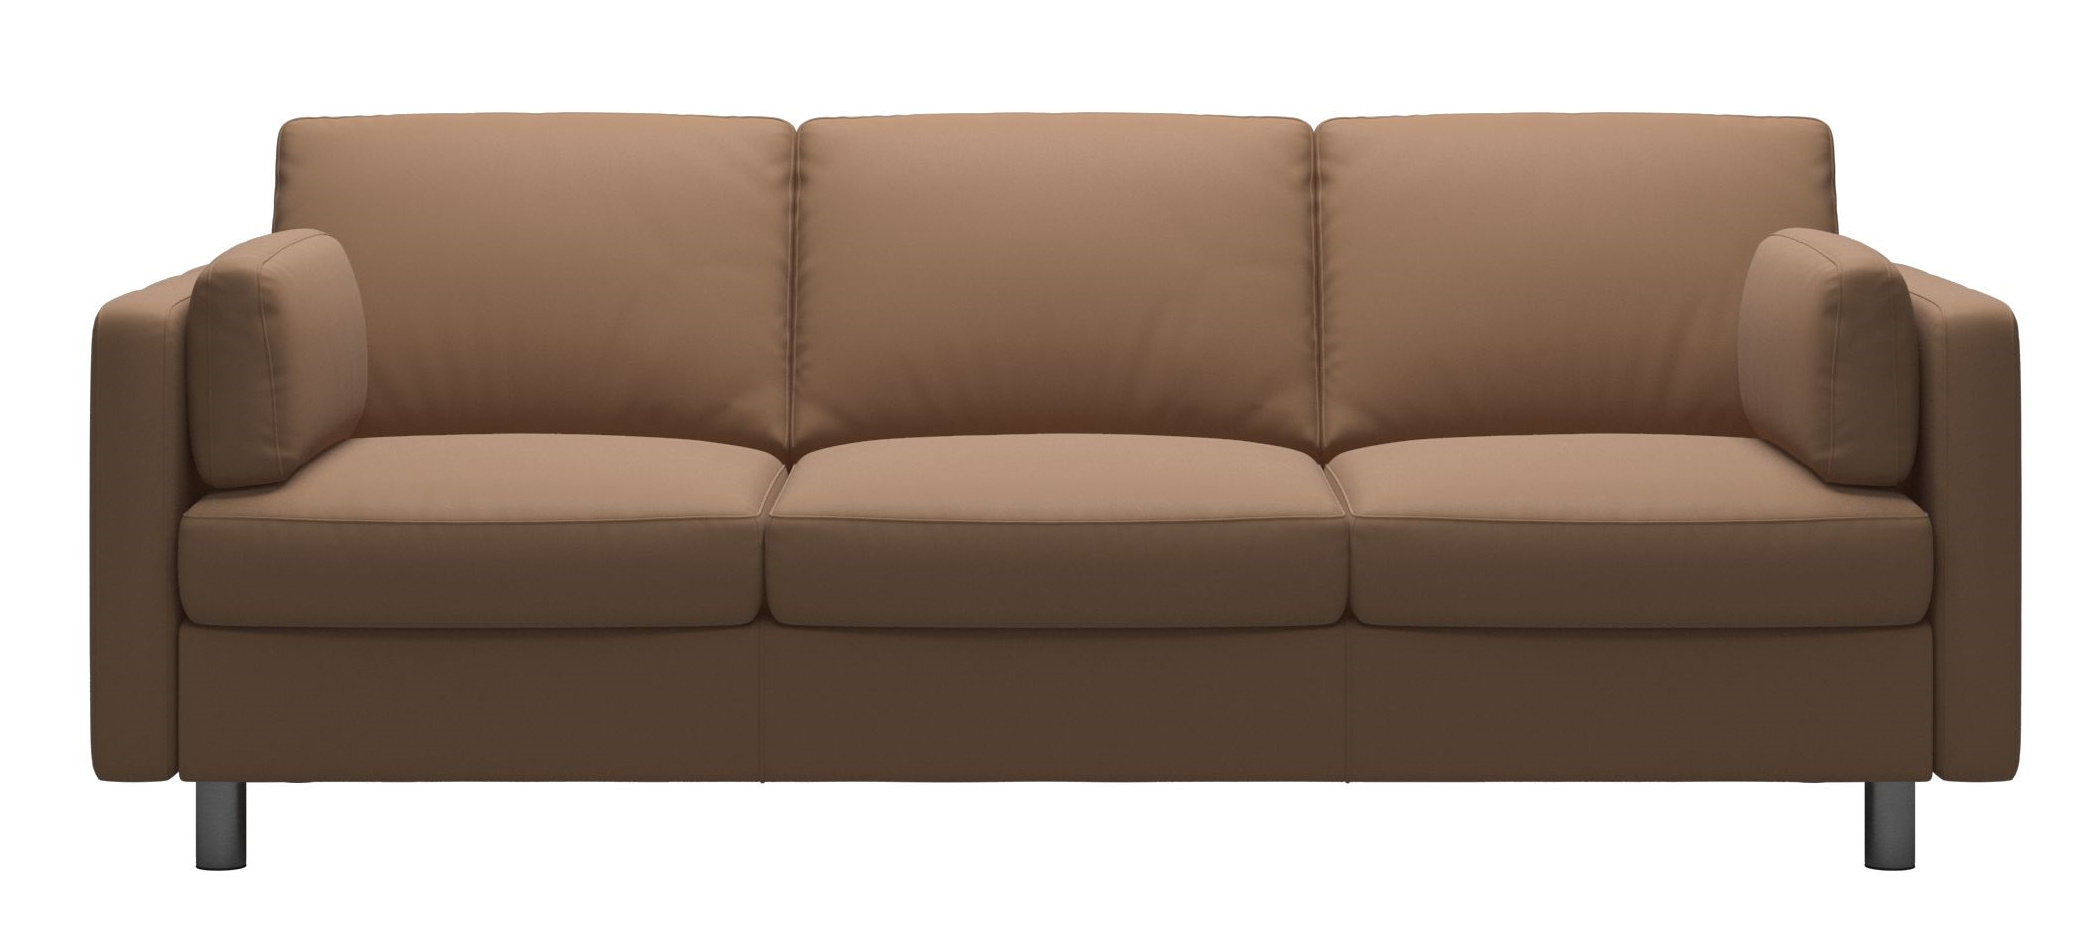 Canapea cu 3 locuri Stressless Emma E600 Classic picioare metalice 11cm piele Batik Latte sensodays.ro imagine 2022 1-1.ro